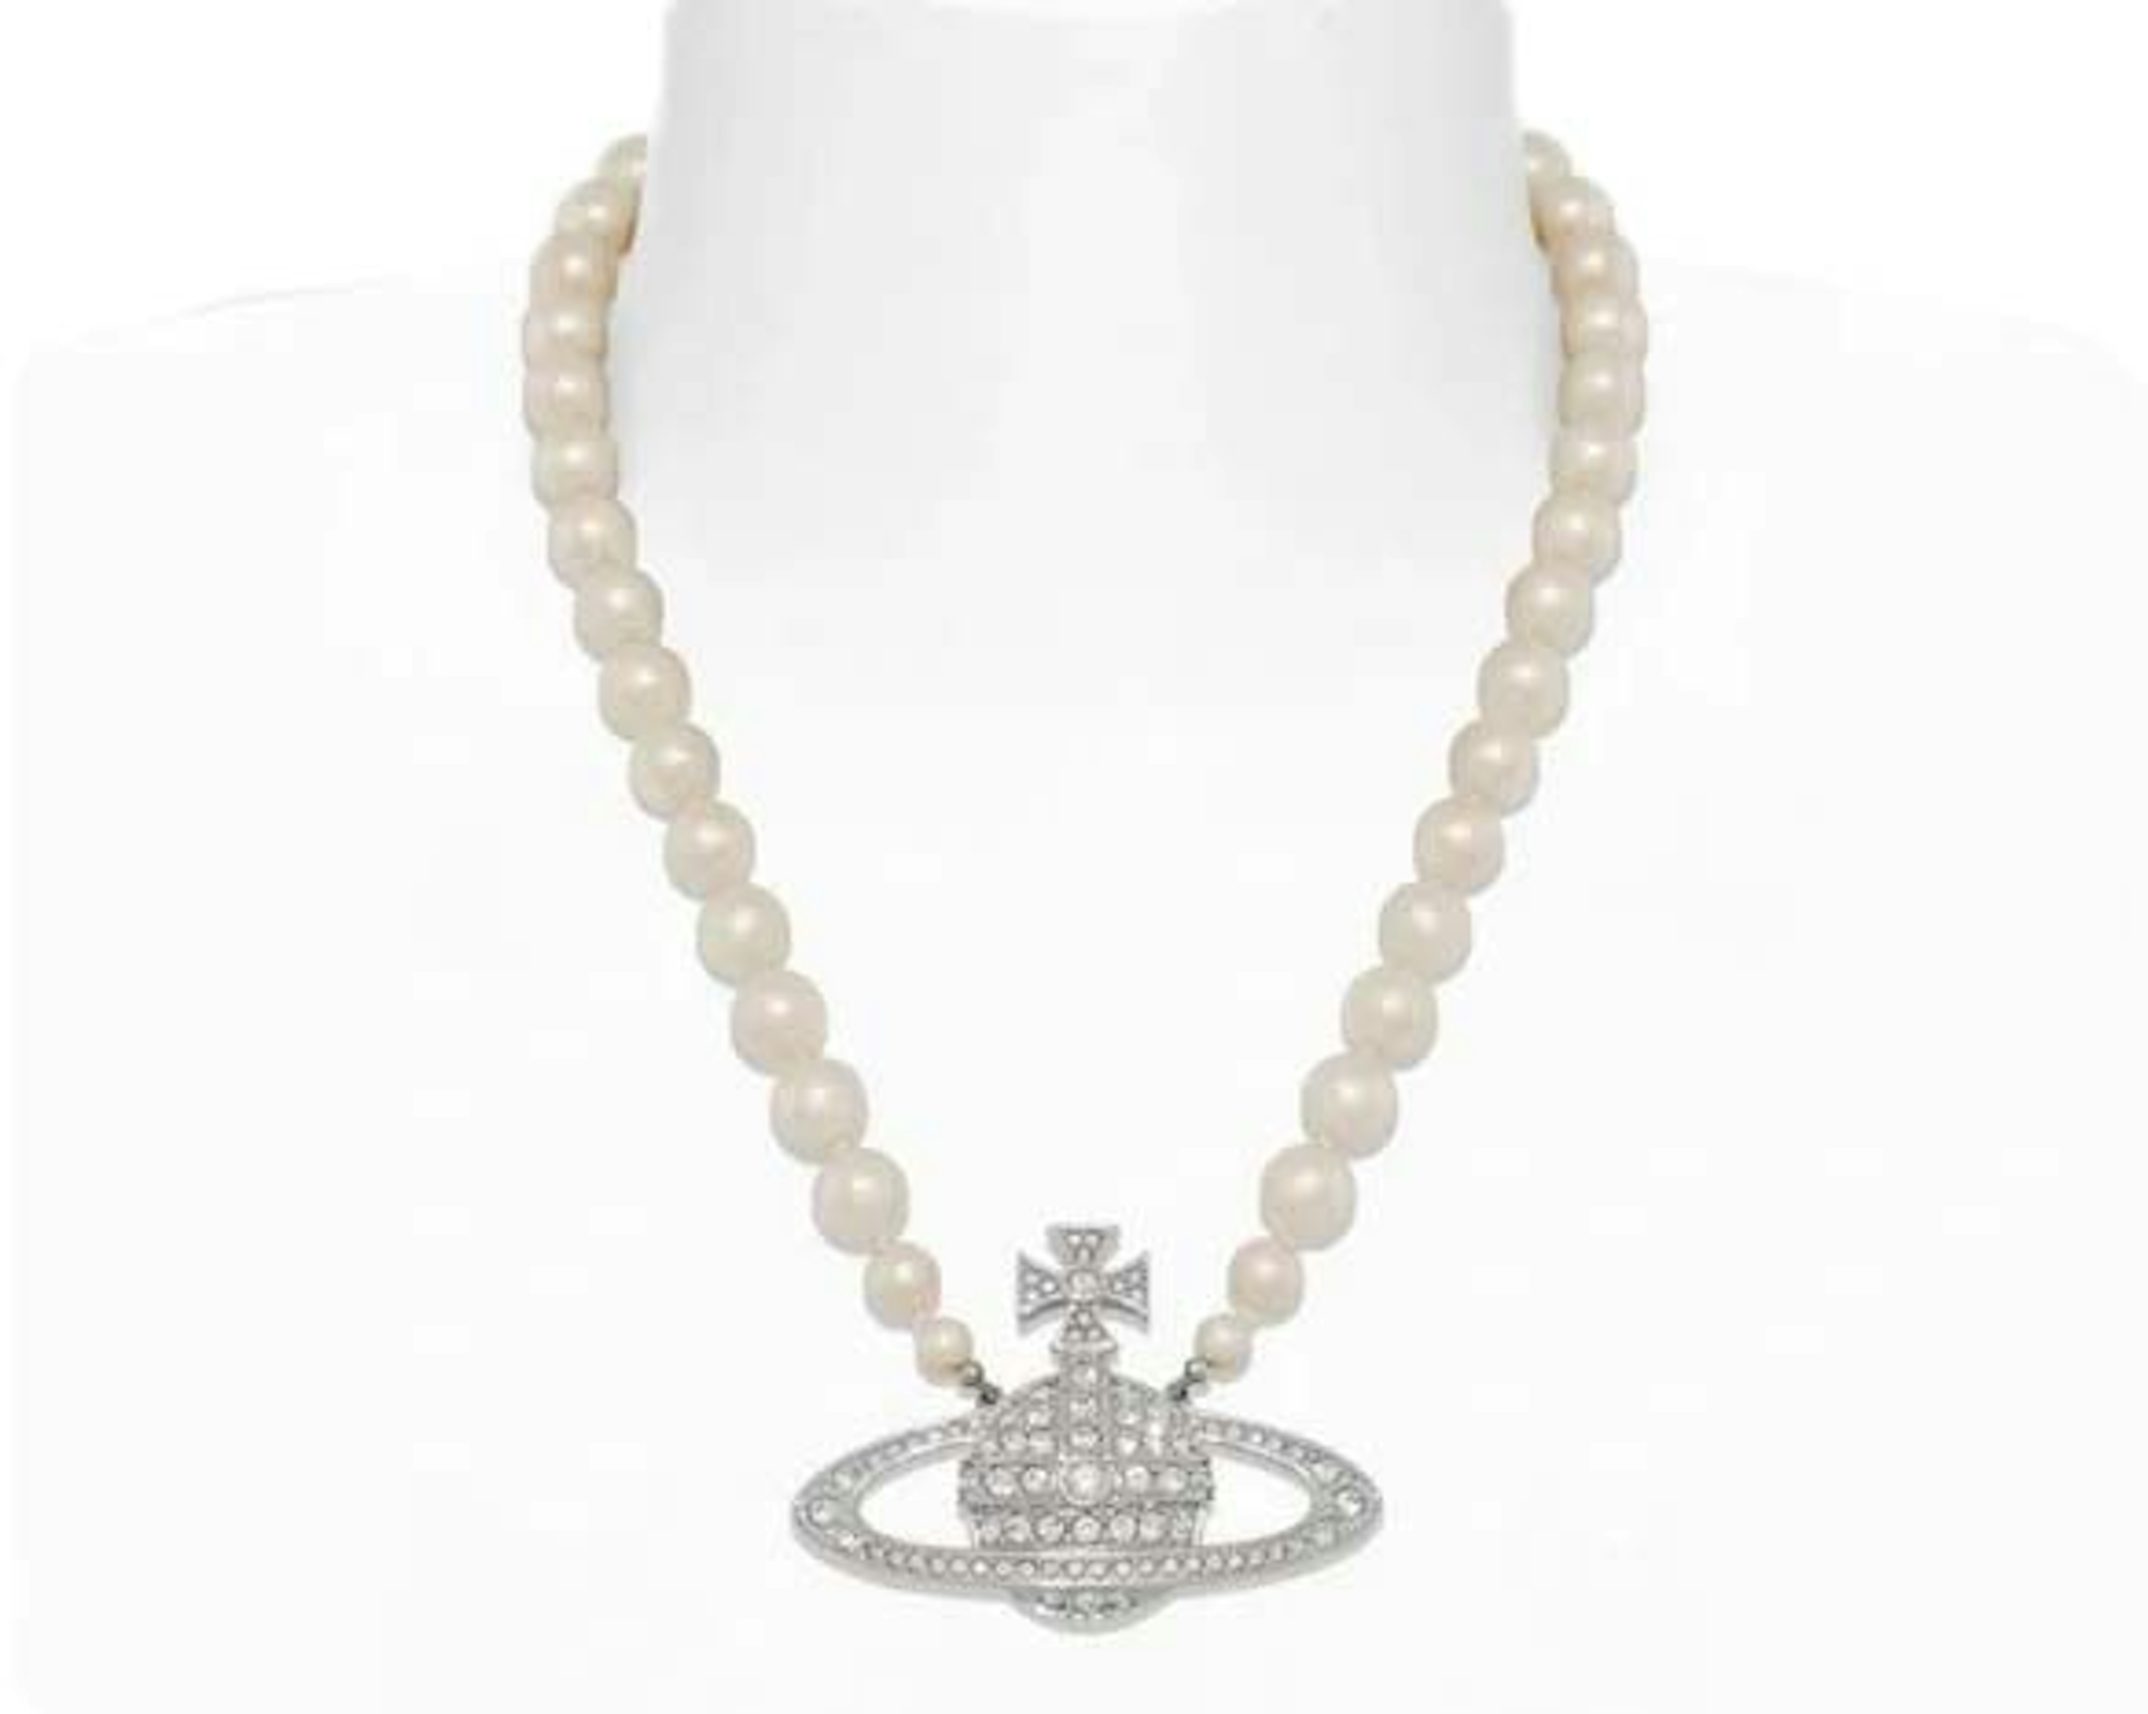 Neysa pearl choker necklace